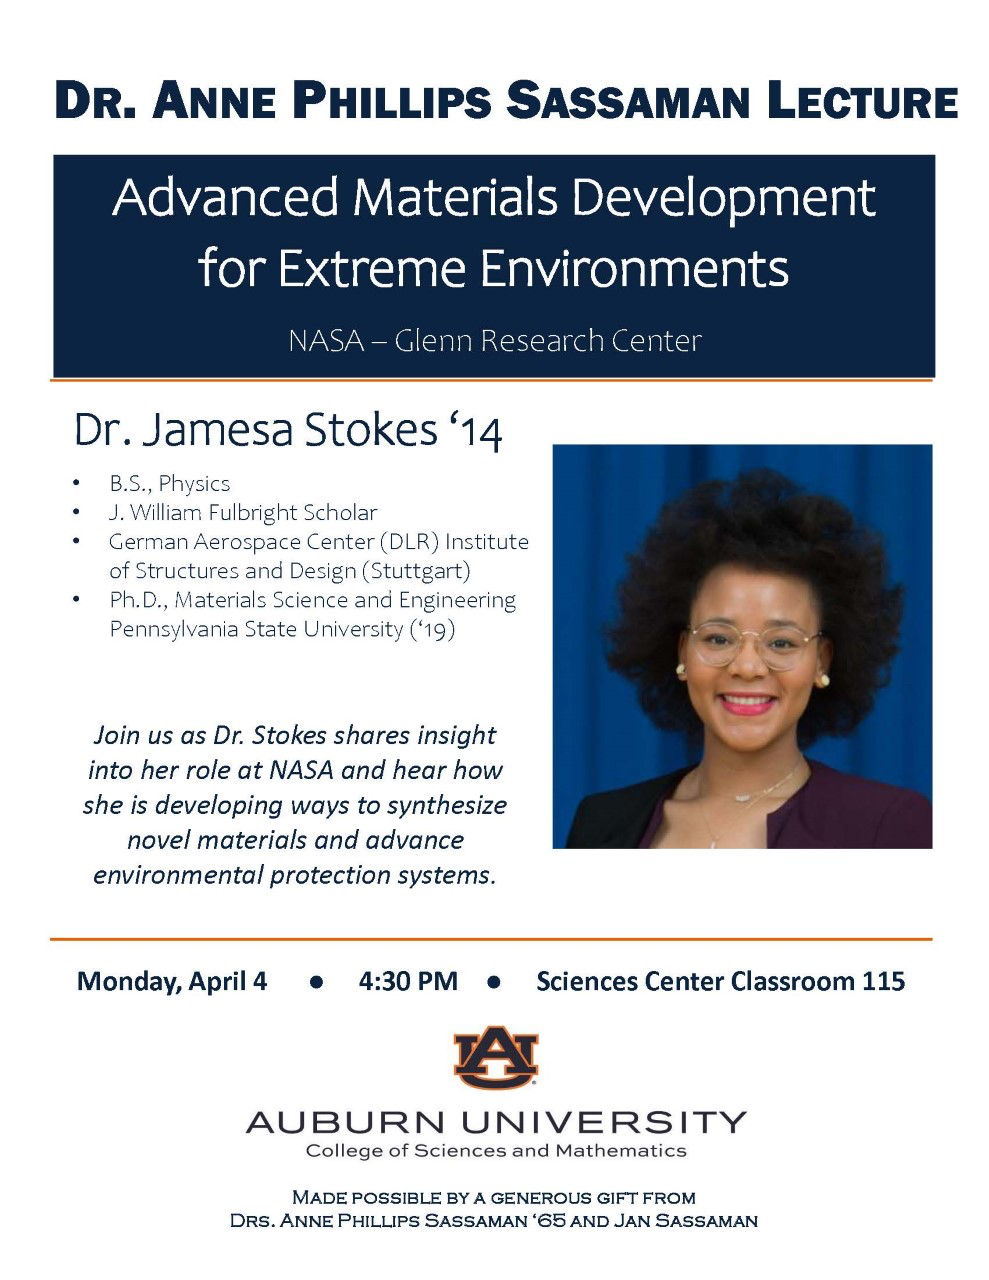 Dr. Anne Phillips Sassaman Lecture on April 4 at 4:30 p.m.